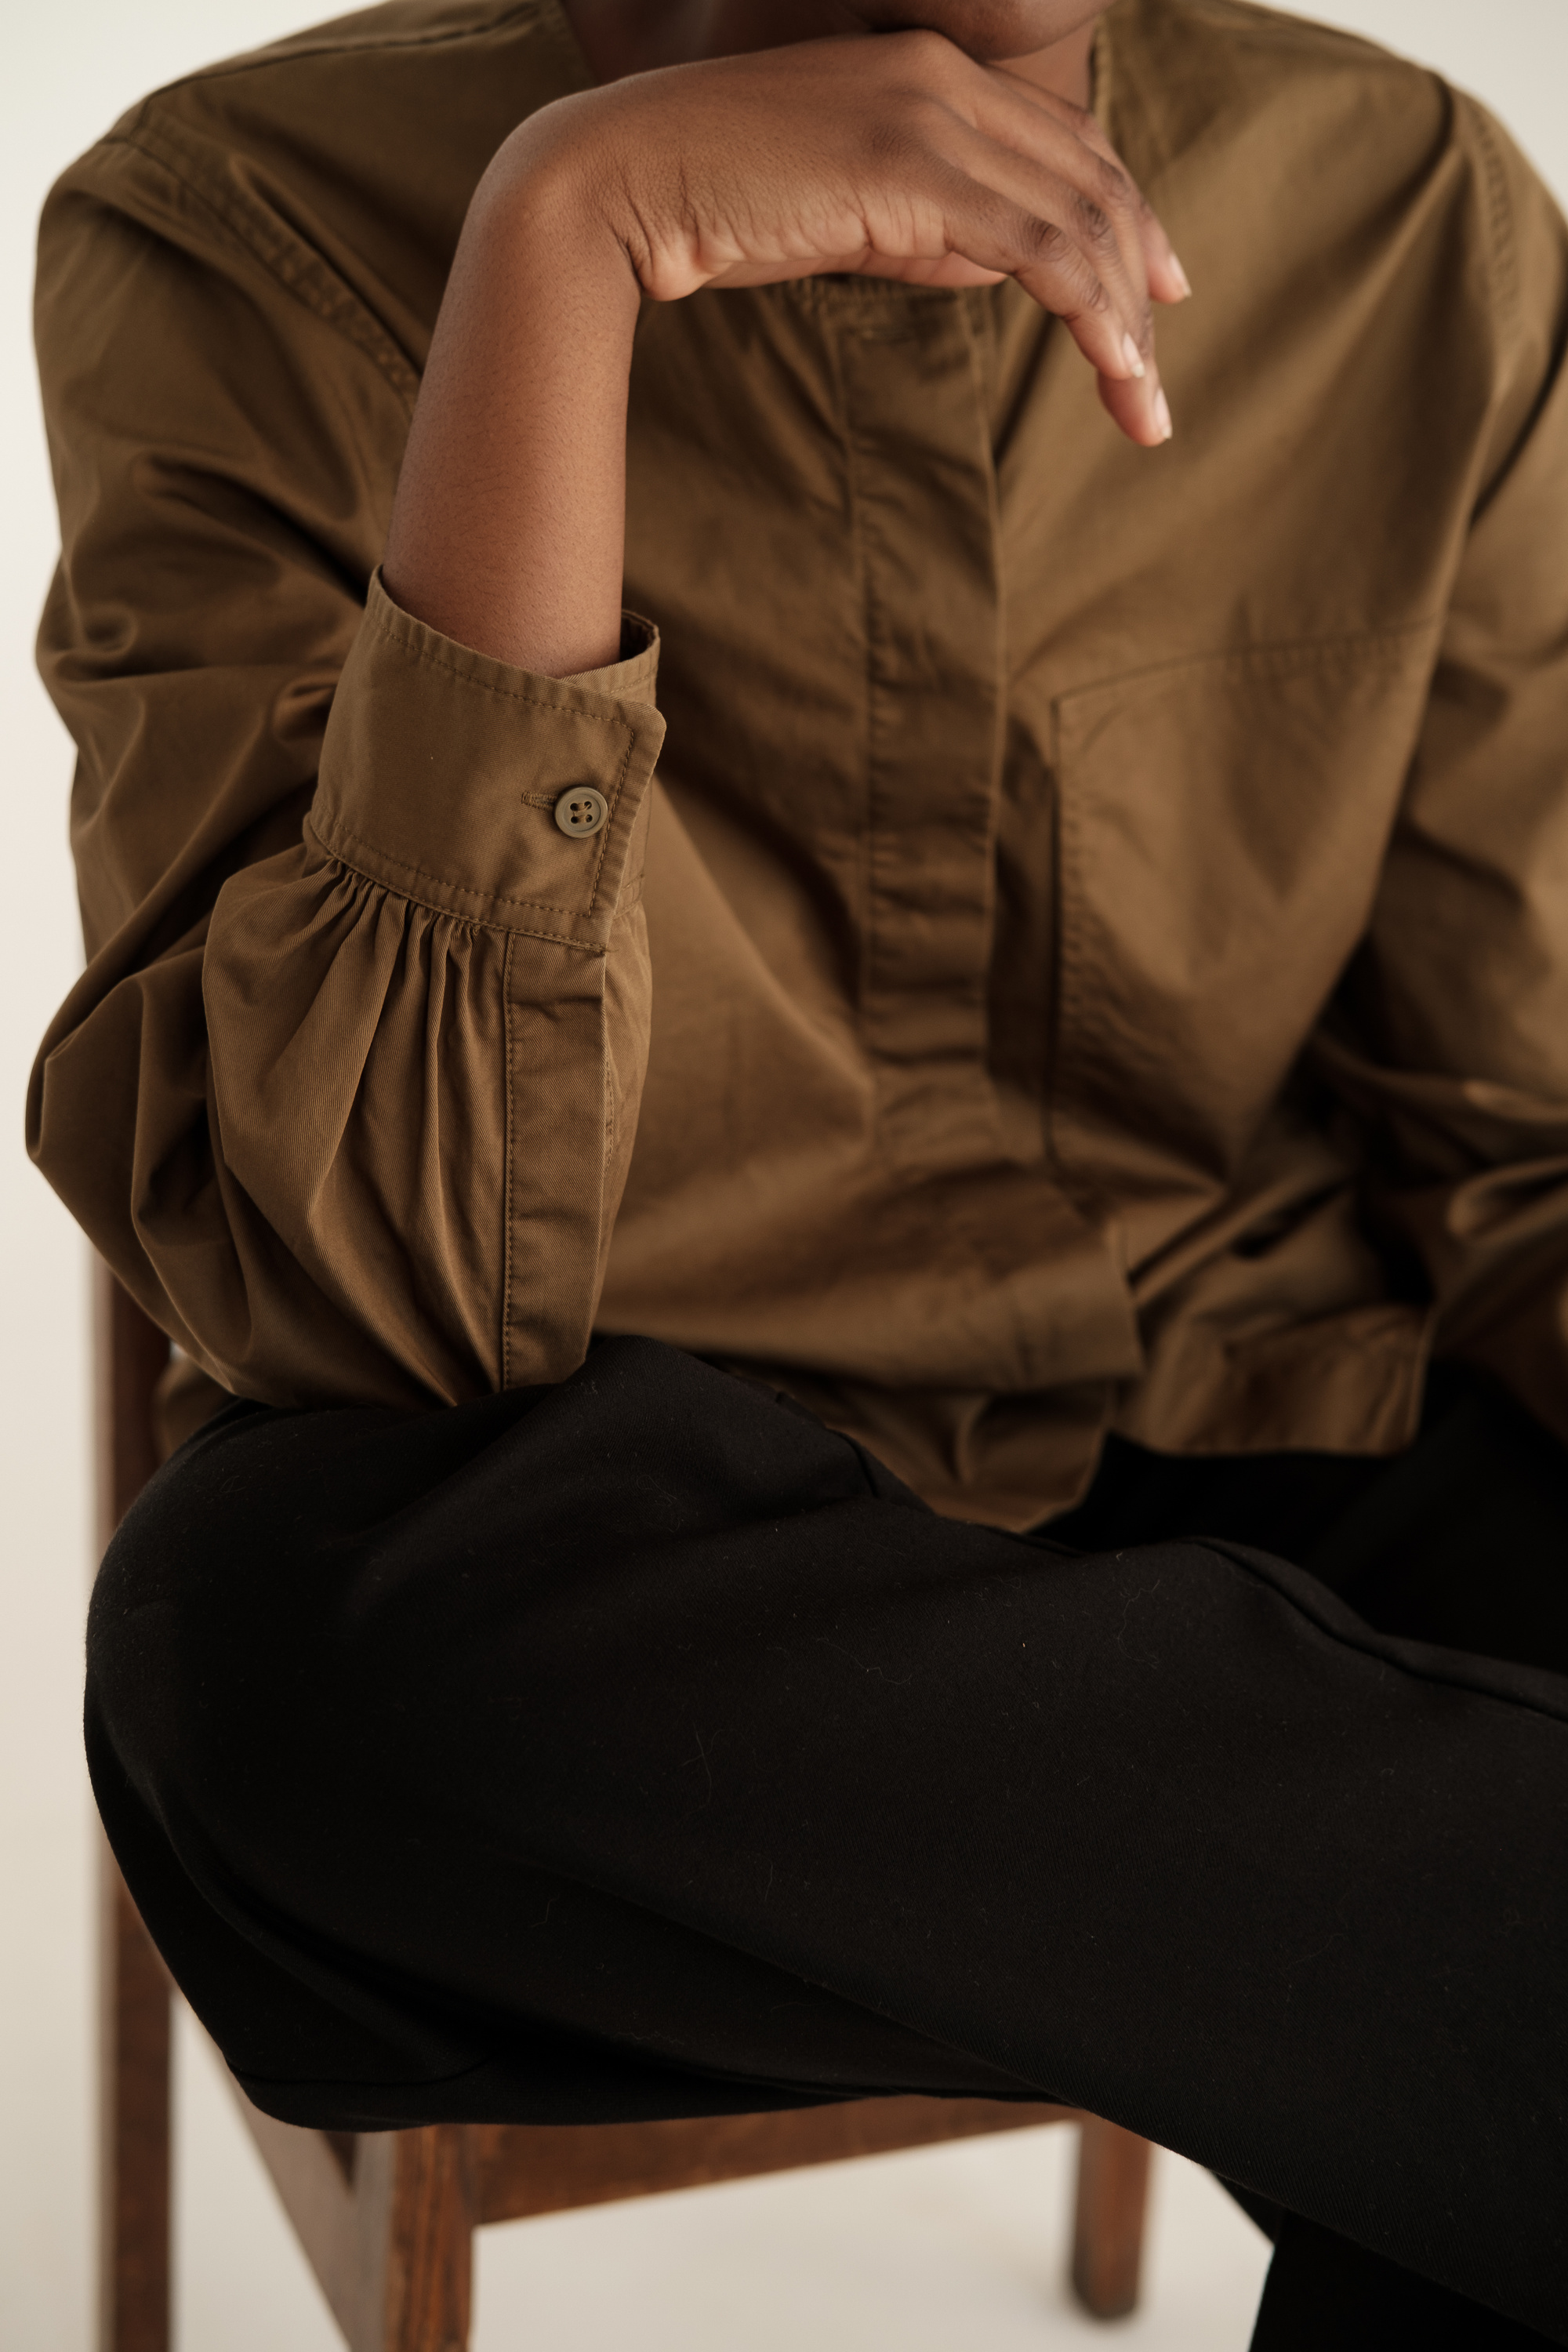 Woman in Casual Brown Dress Shirt and Slacks